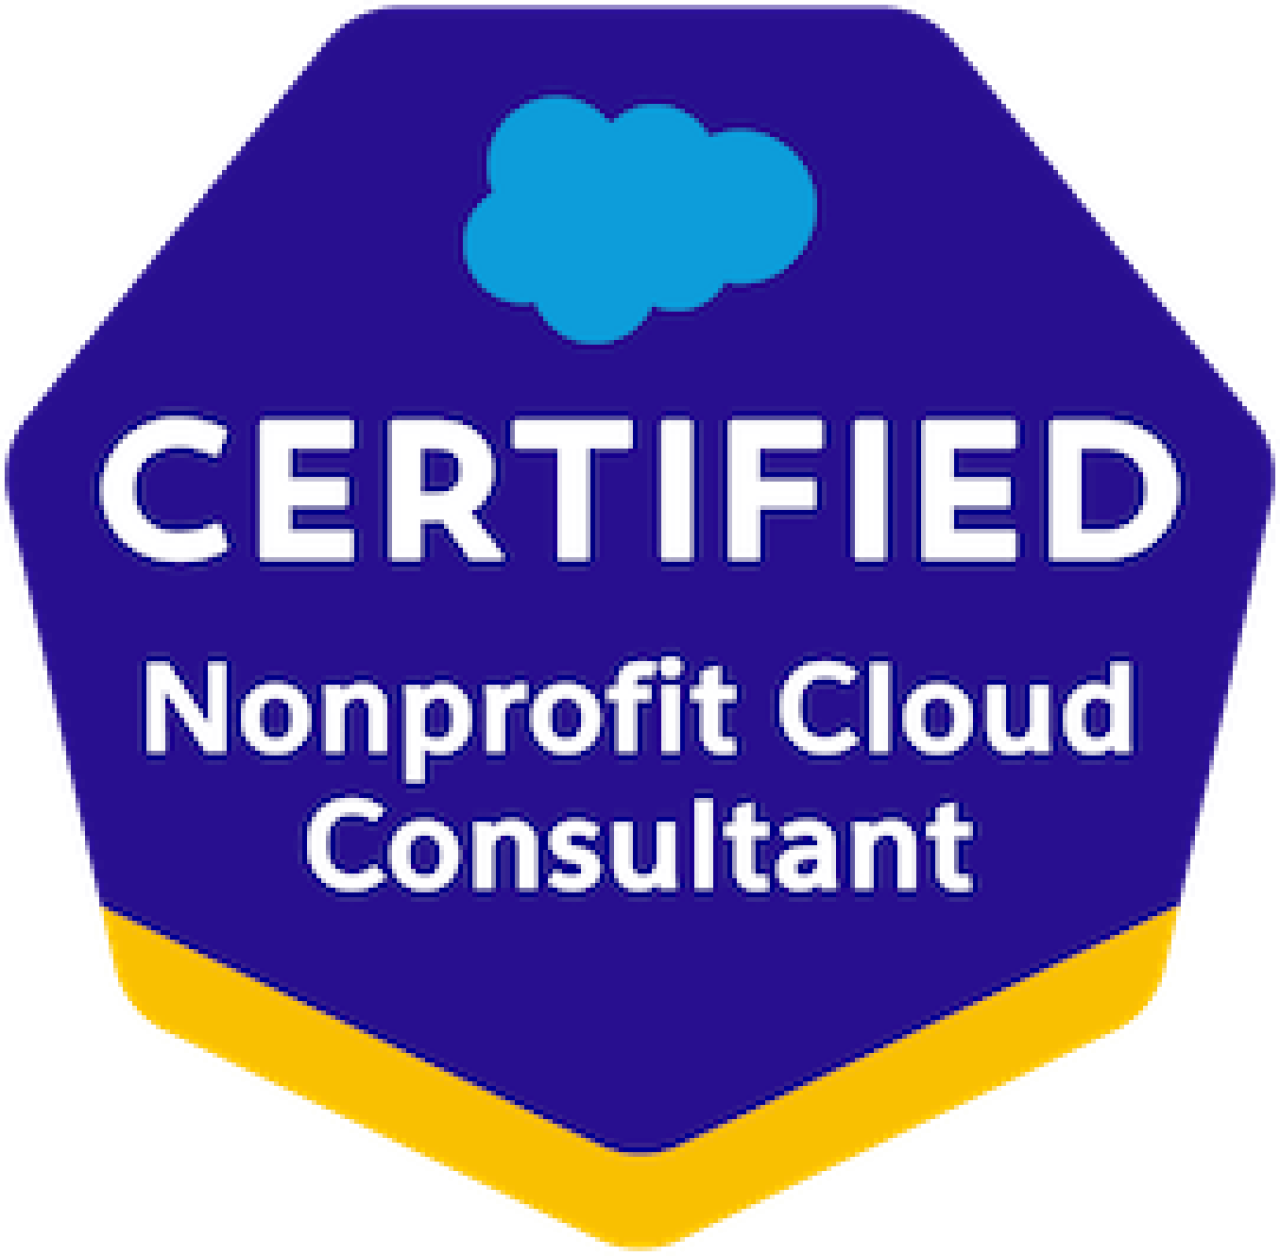 Salesforce Certified Nonprofit Cloud Consultant.